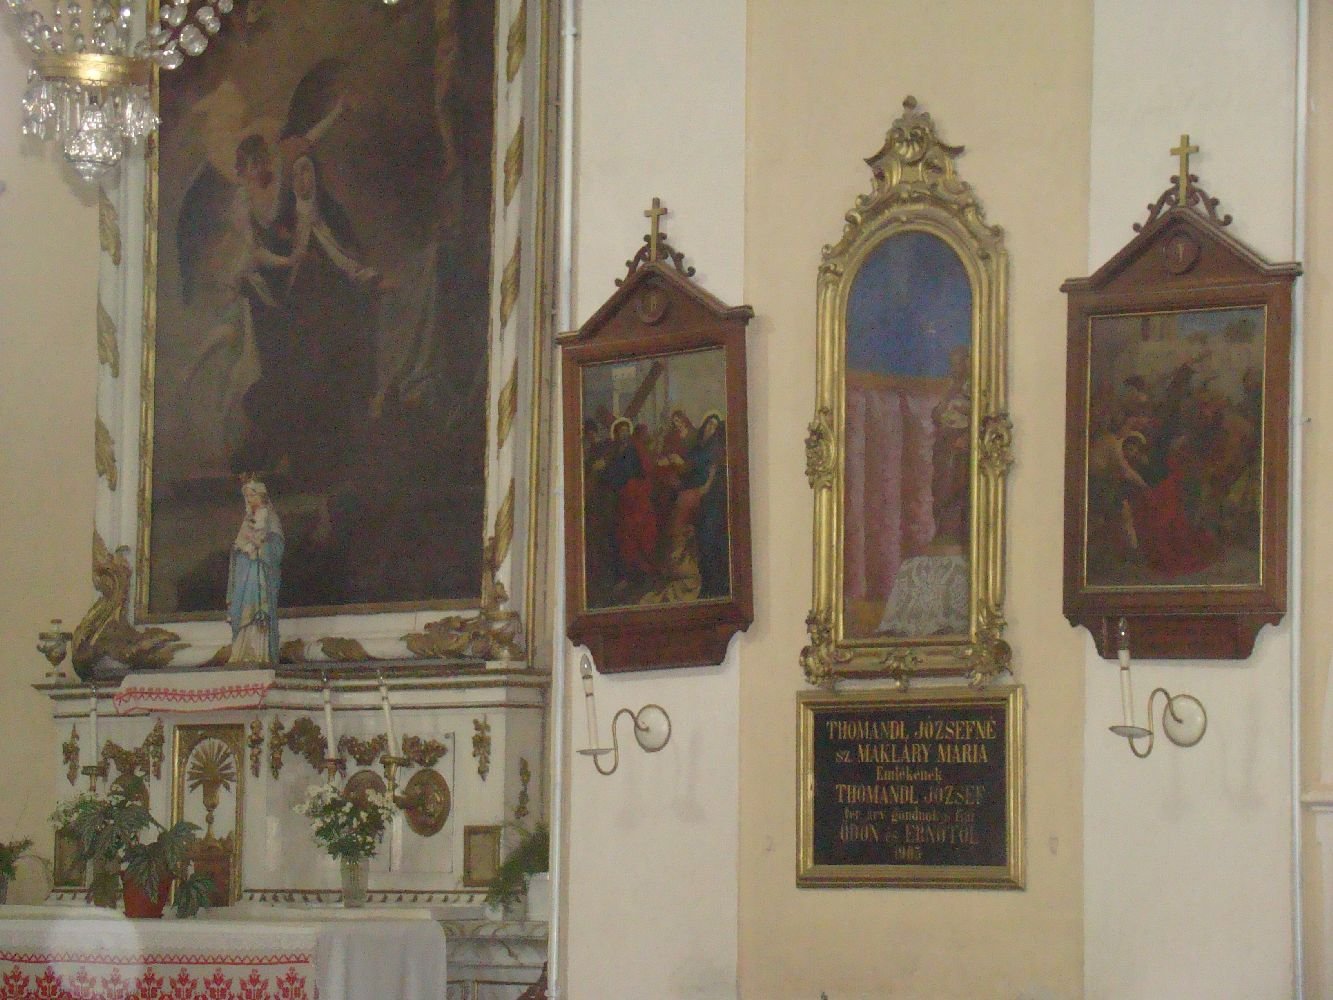 Biserica Sfânta Elisabeta din Sibiu